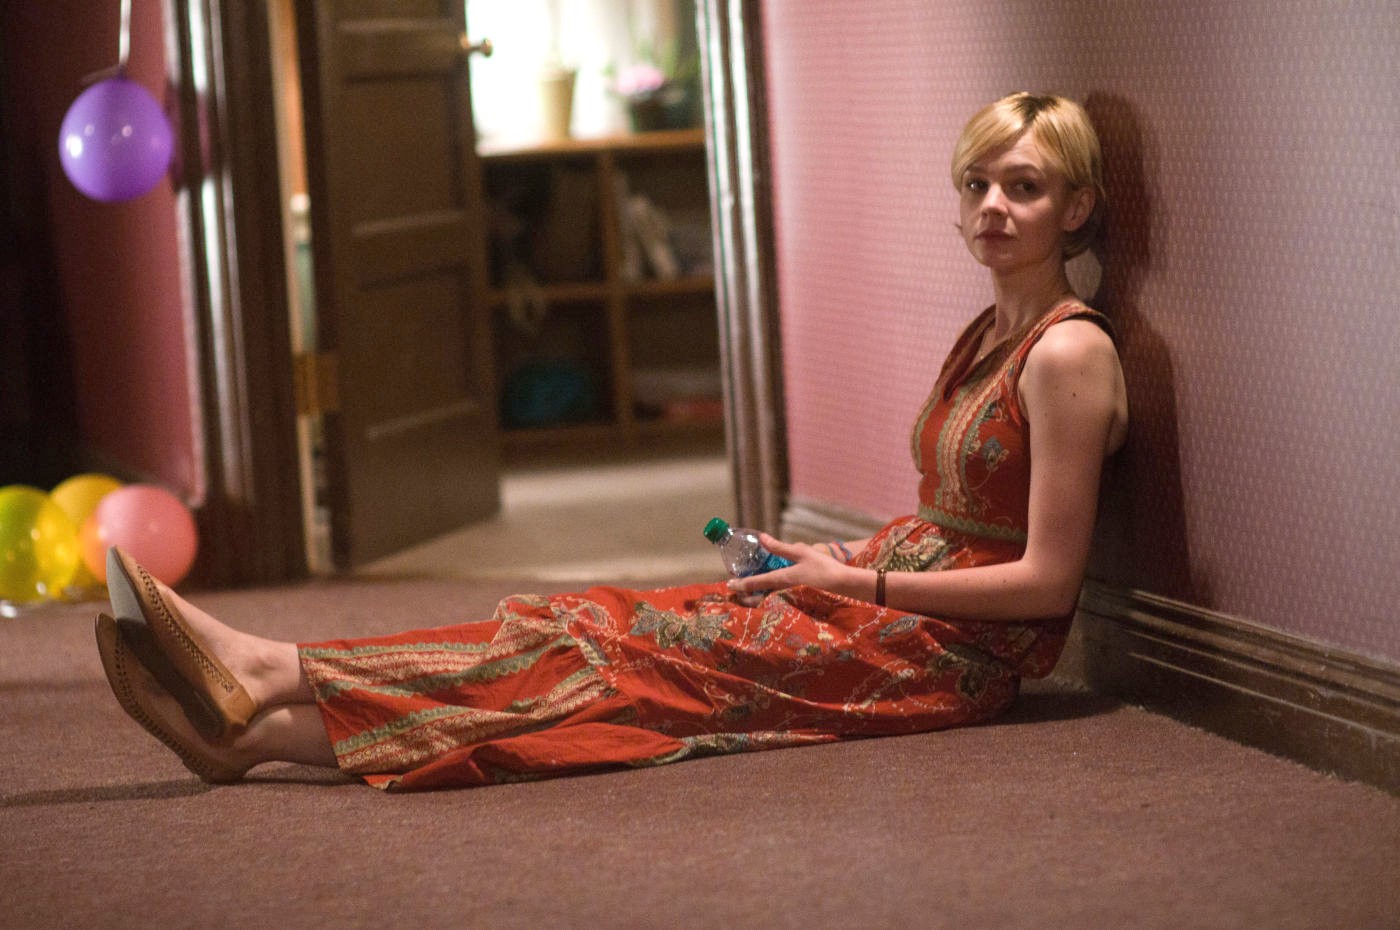 arey Mulligan stars as Irene in FilmDistrict's Drive (2011)